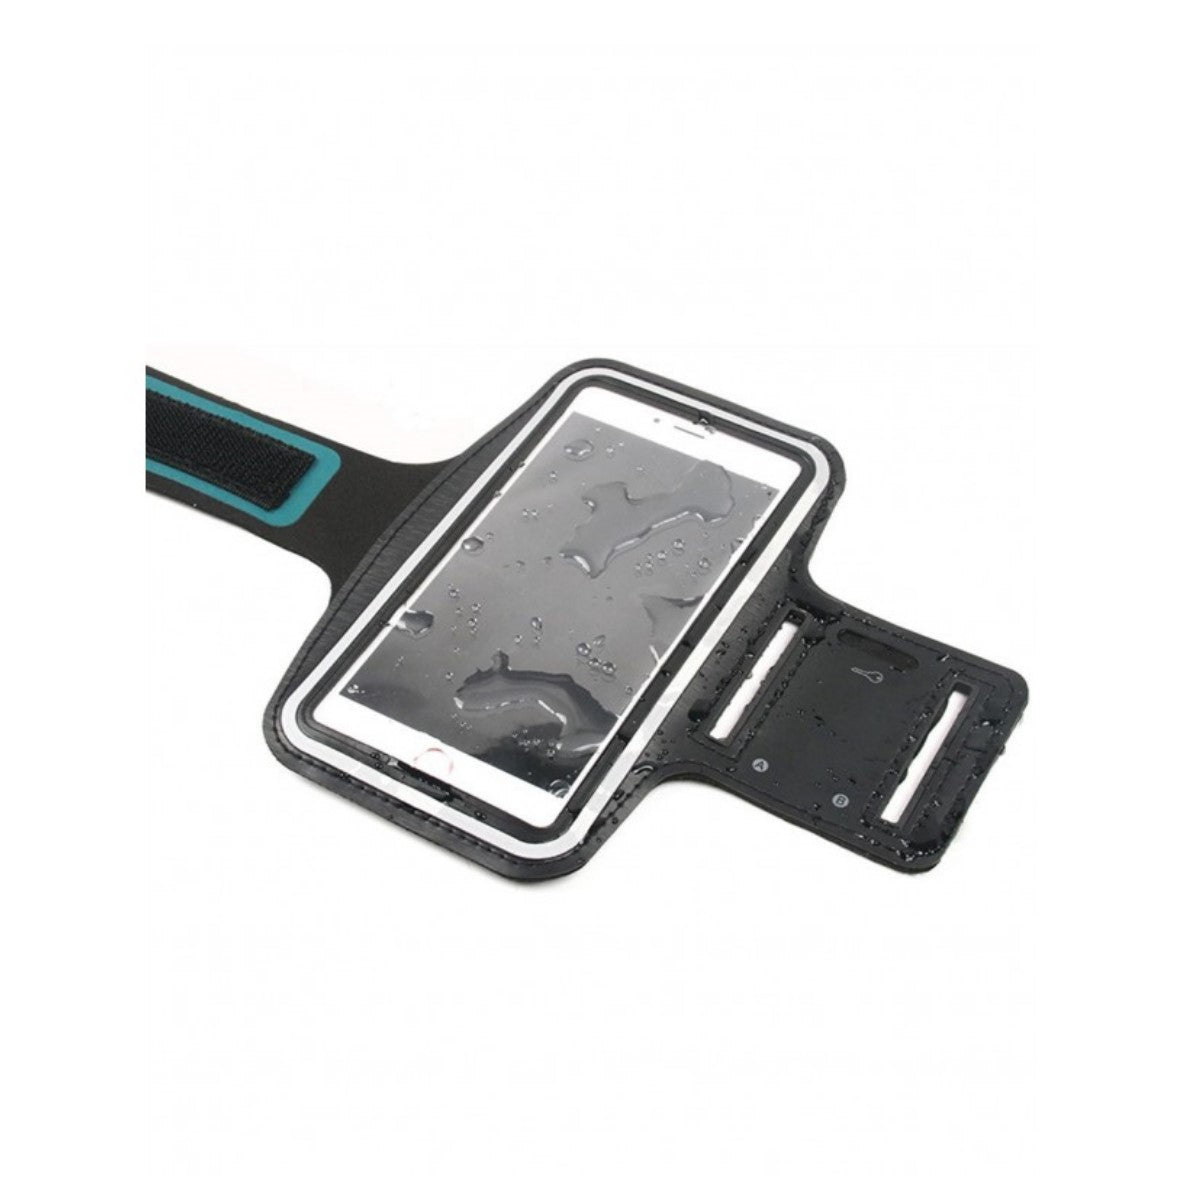 Armband für OnePlus Nord 2 Sportarmband Handy Tasche Fitness Jogging Handyhülle